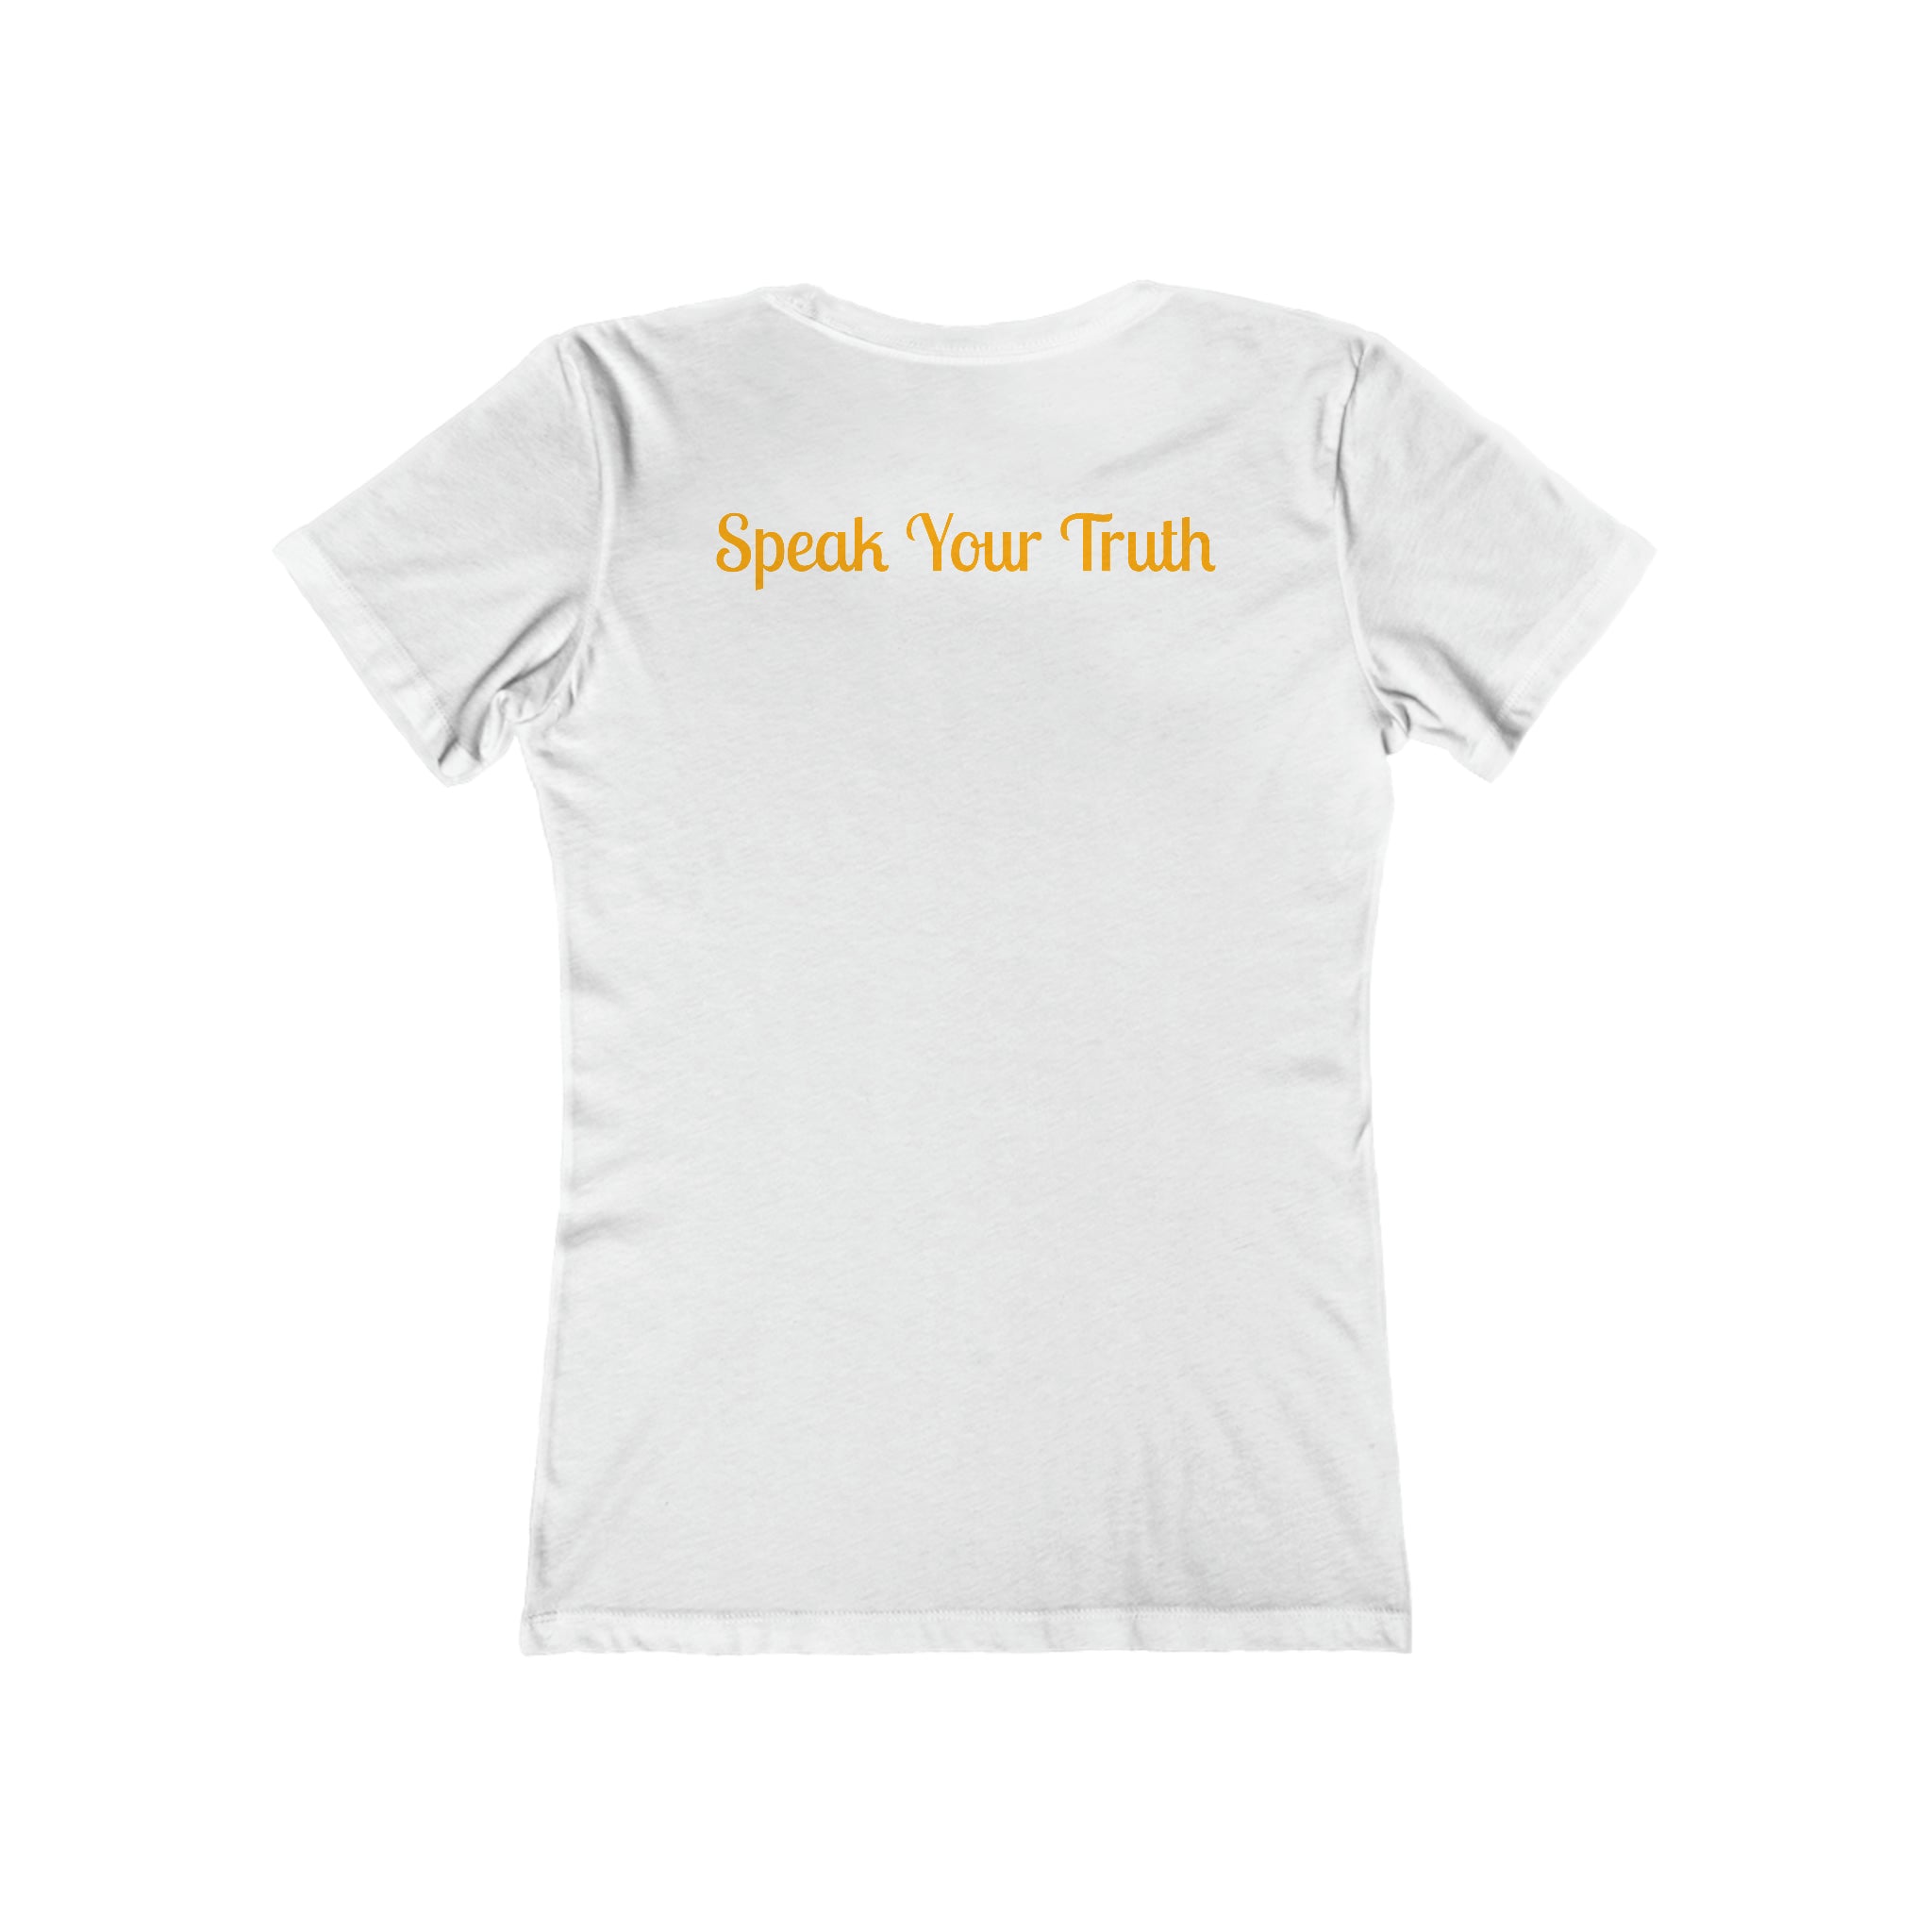 Speak Your Truth Boyfriend Tee: Advocate Authenticity Solid White Awareness Break the Stigma Mental Health Support Pledge Donation slim fit shirt Tee women shirt T-Shirt 11849755538425657830_2048_3ed3d29b-18a7-4591-b148-b4a2fbf2d191 Printify